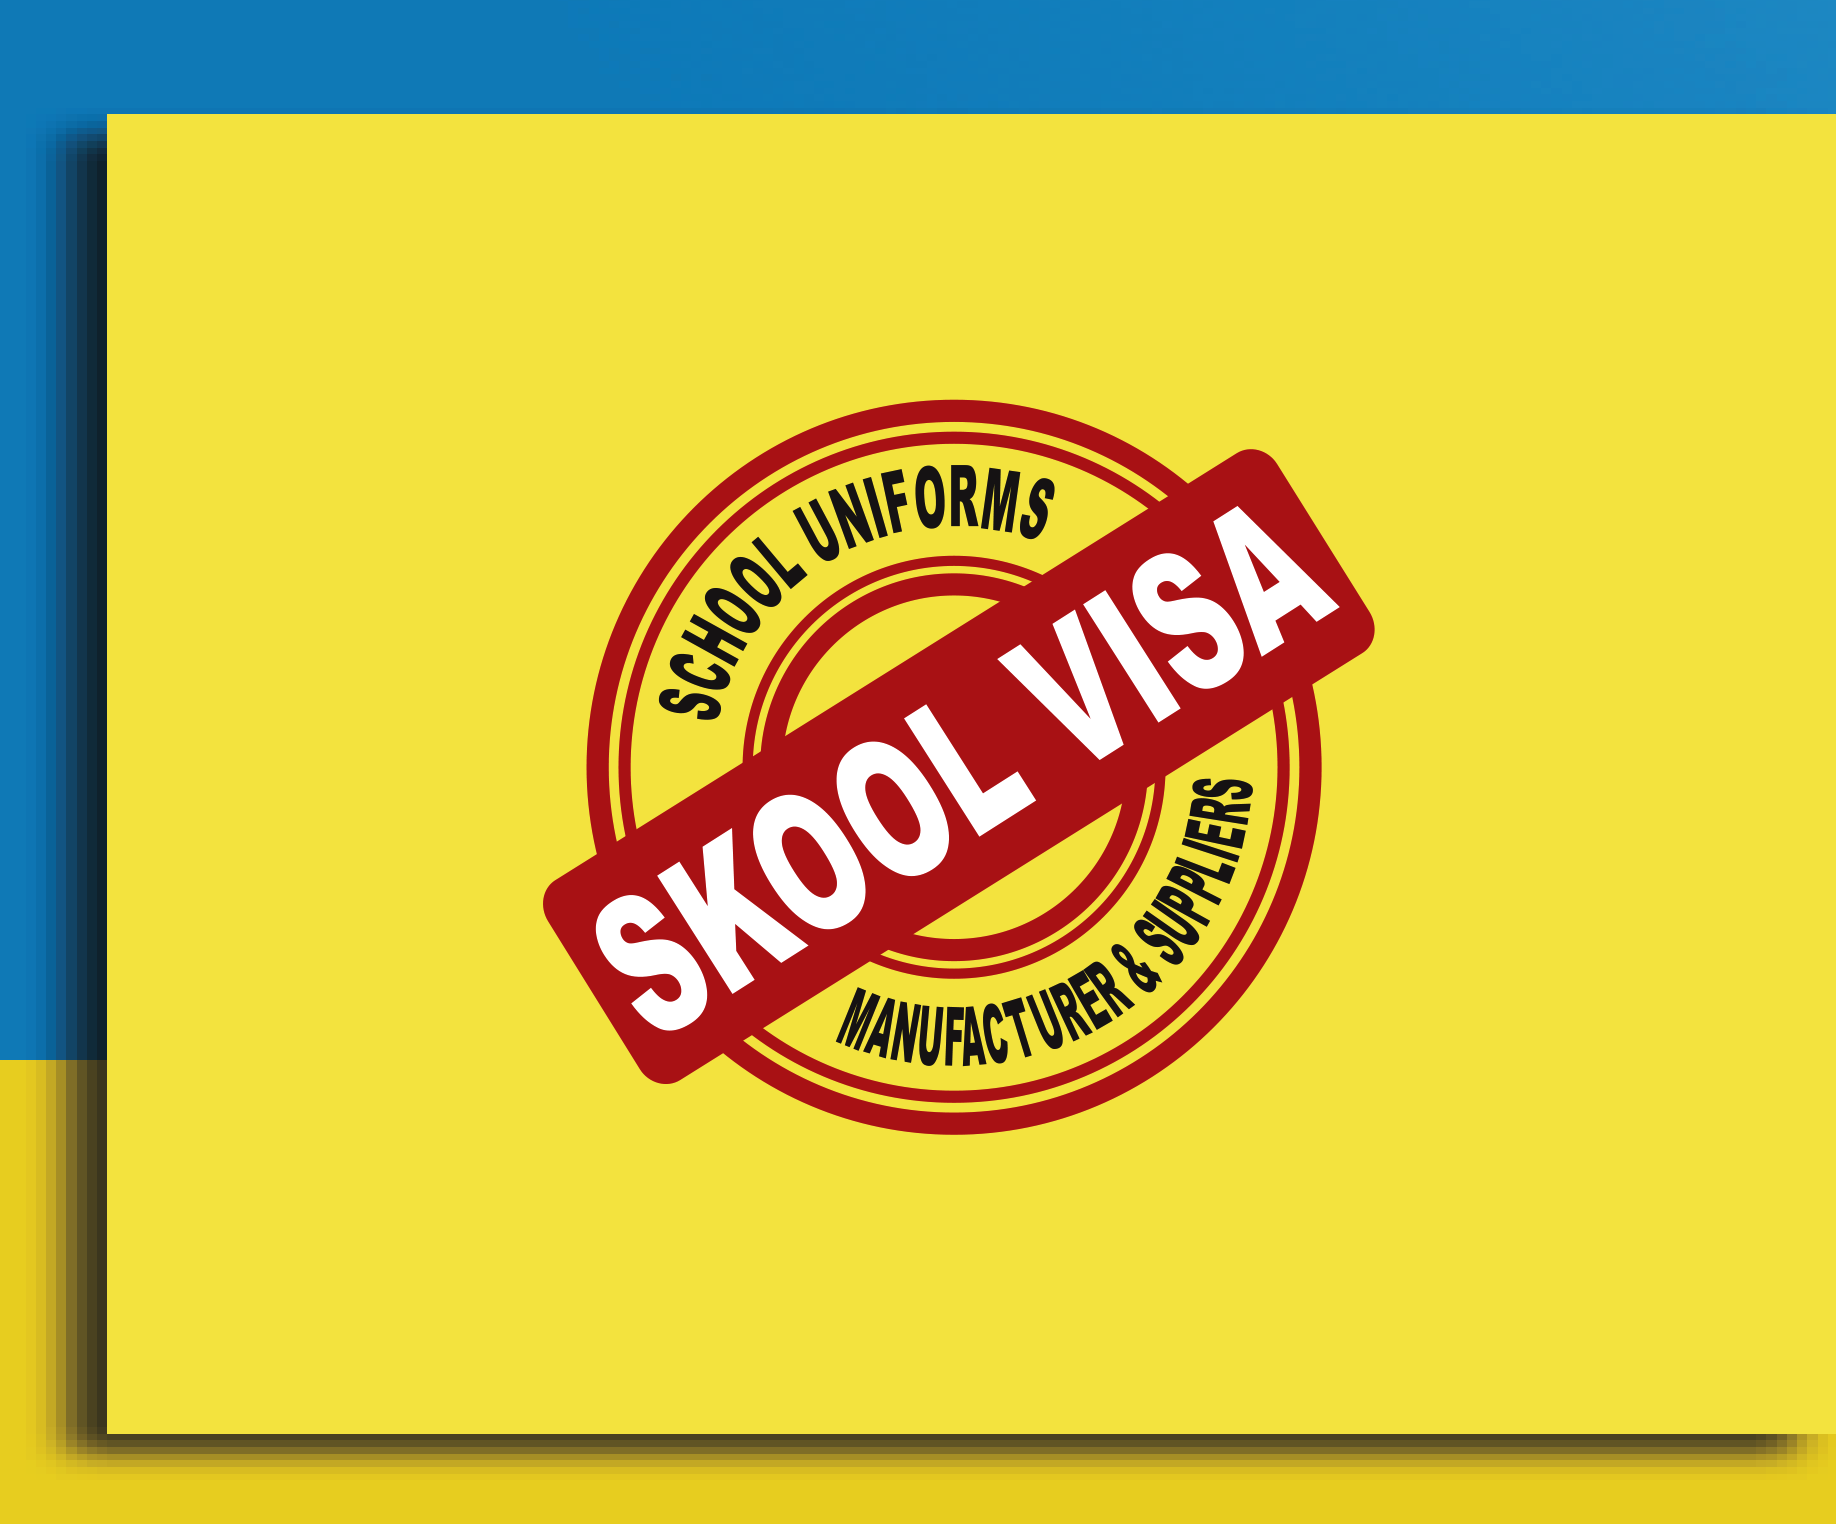 Know more about Skool Visa